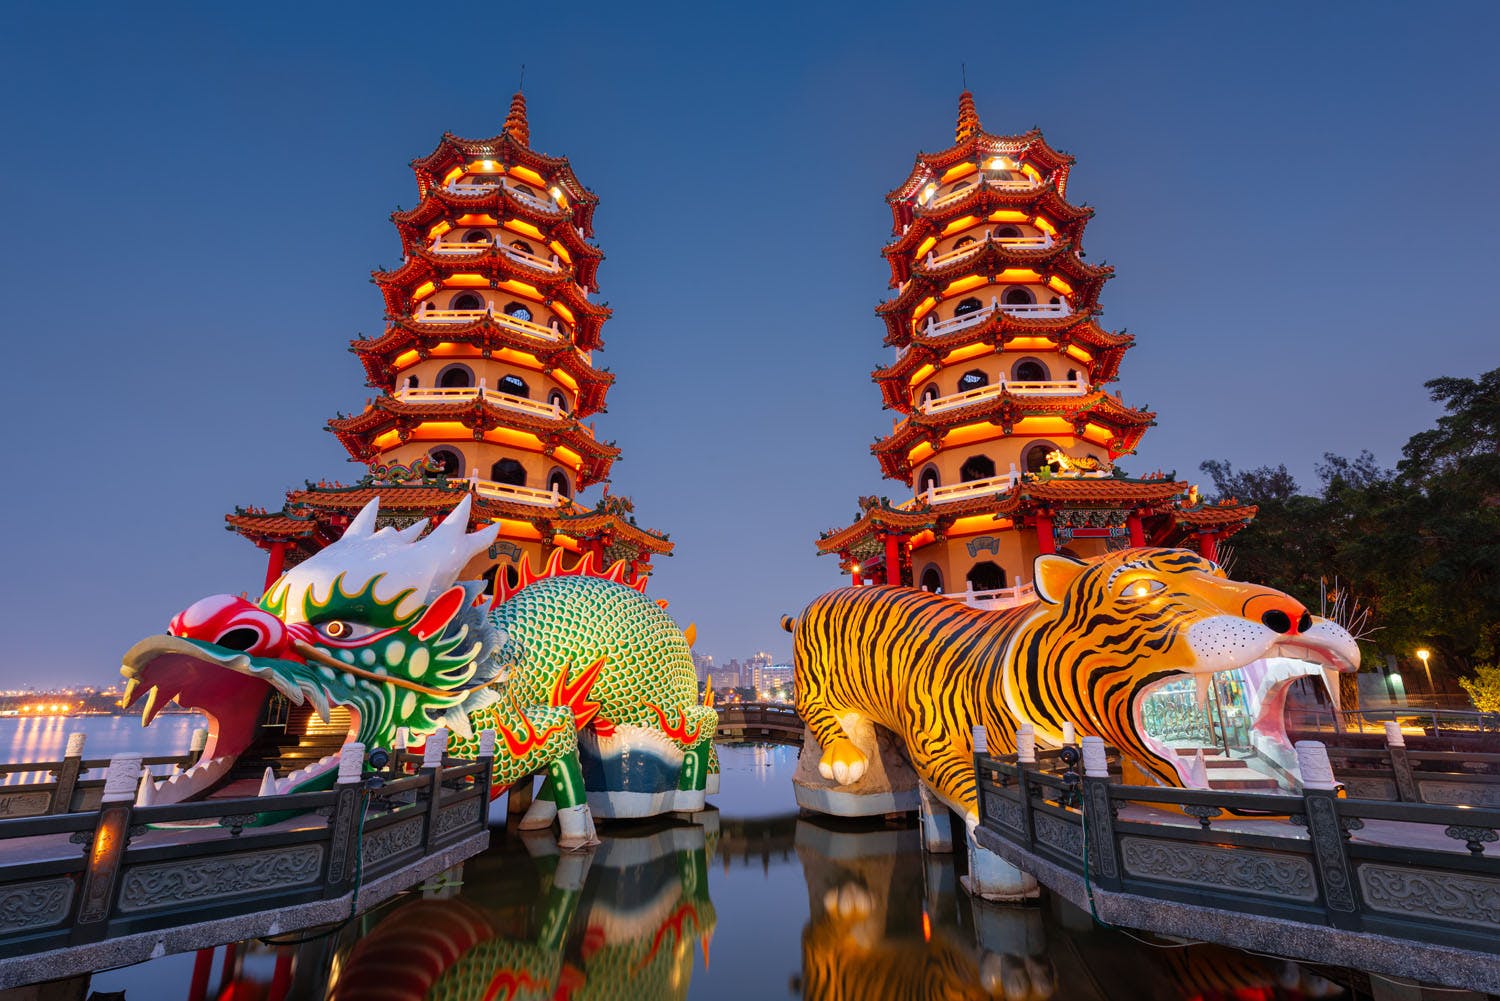 kaohsiung - dragon and tiger pagodas at lotus pond